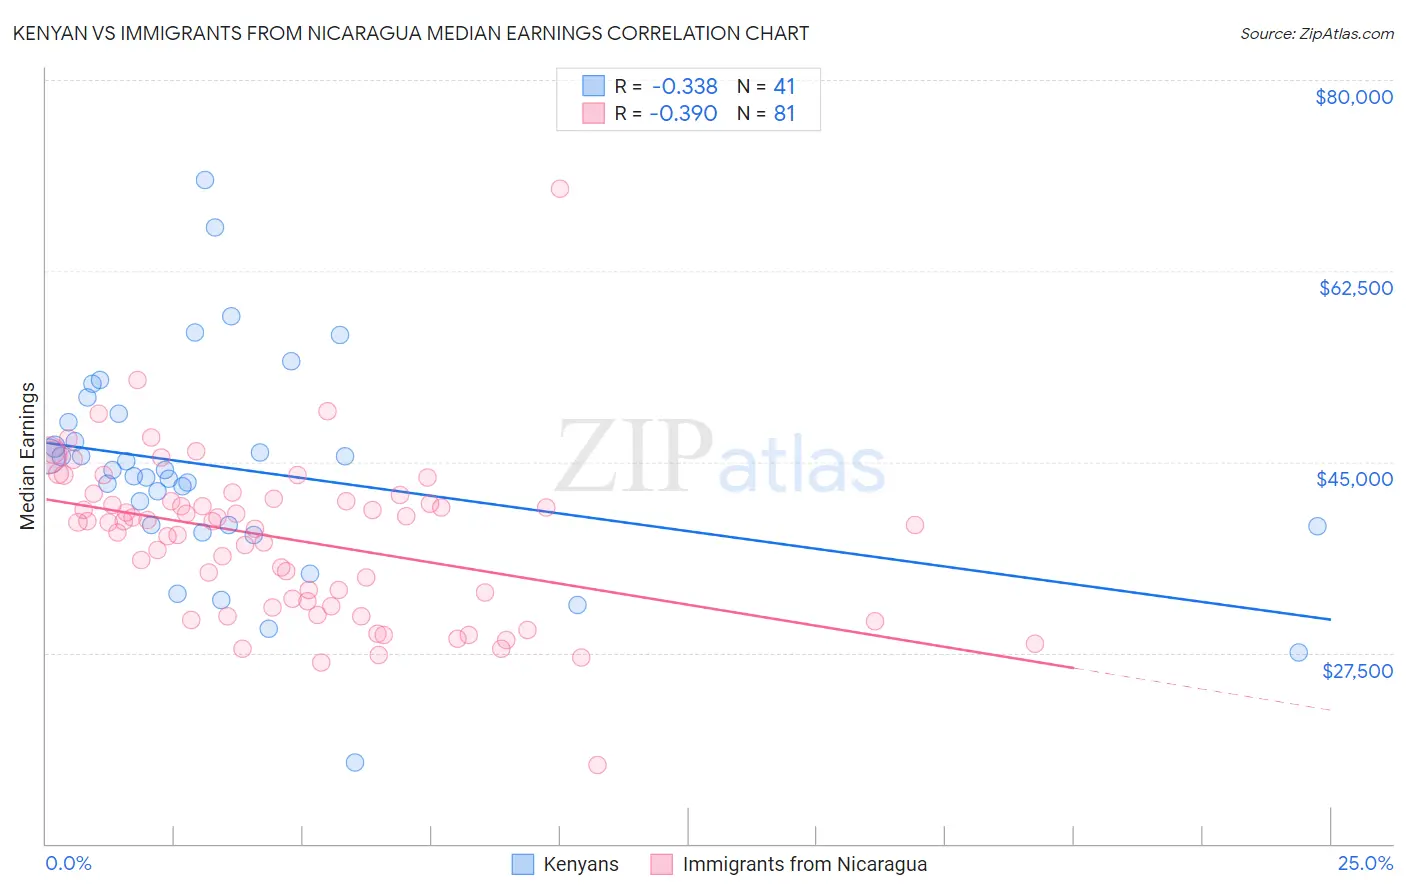 Kenyan vs Immigrants from Nicaragua Median Earnings